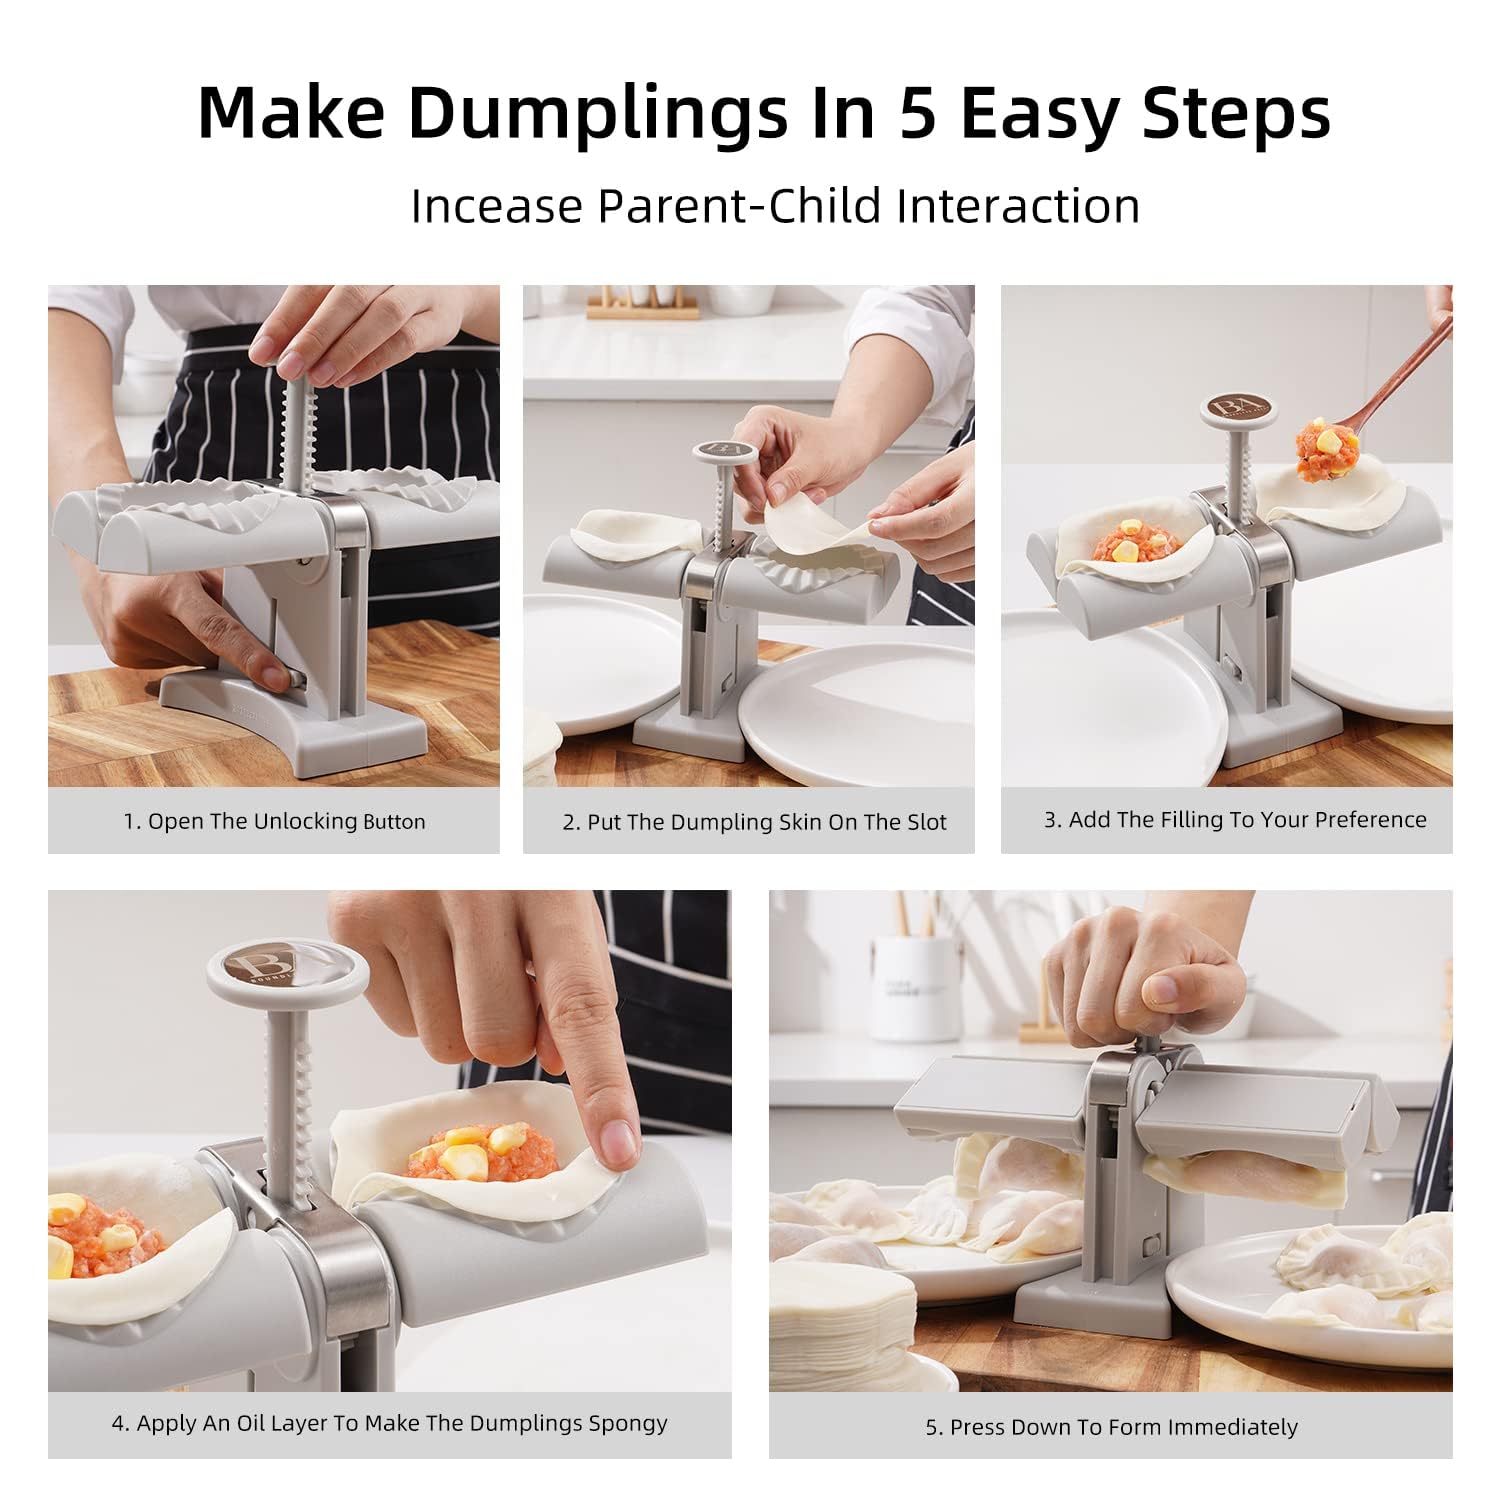 5300 Dumpling Maker Mold,Double Head Dumpling Mold Wrap Two At A One Time,Household Dumpling Maker Mould,Easy-Tool for Making Dumplings,Dumpling Press Mold Kitchen Accessories 